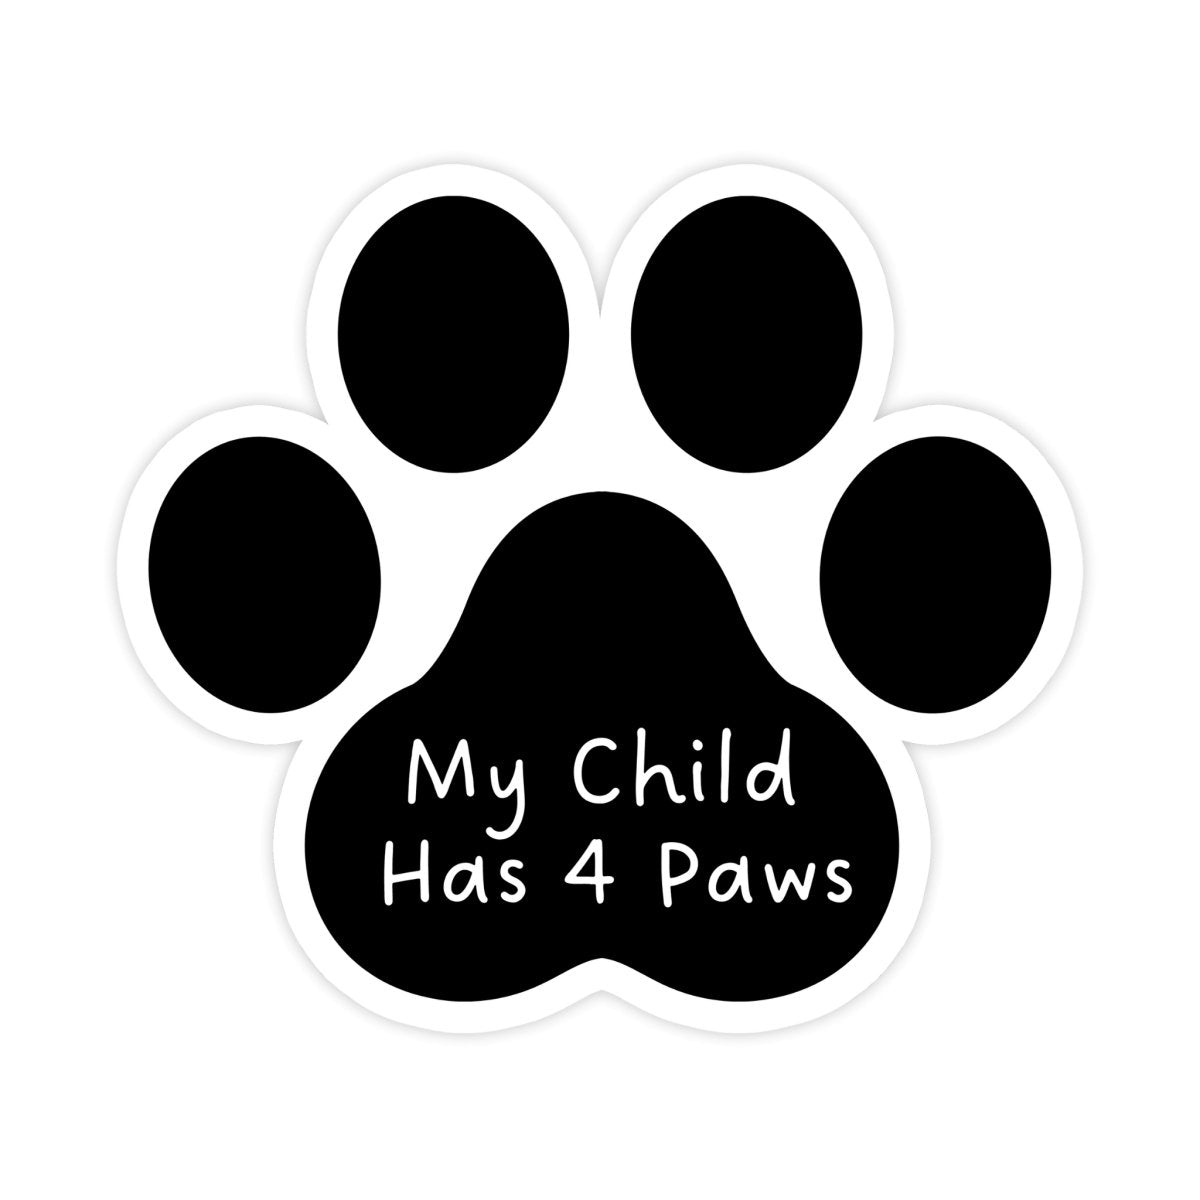 My Child Has 4 Paws Sticker - stickerbullMy Child Has 4 Paws StickerRetail StickerstickerbullstickerbullTaylor_Child4PawsMy Child Has 4 Paws Sticker